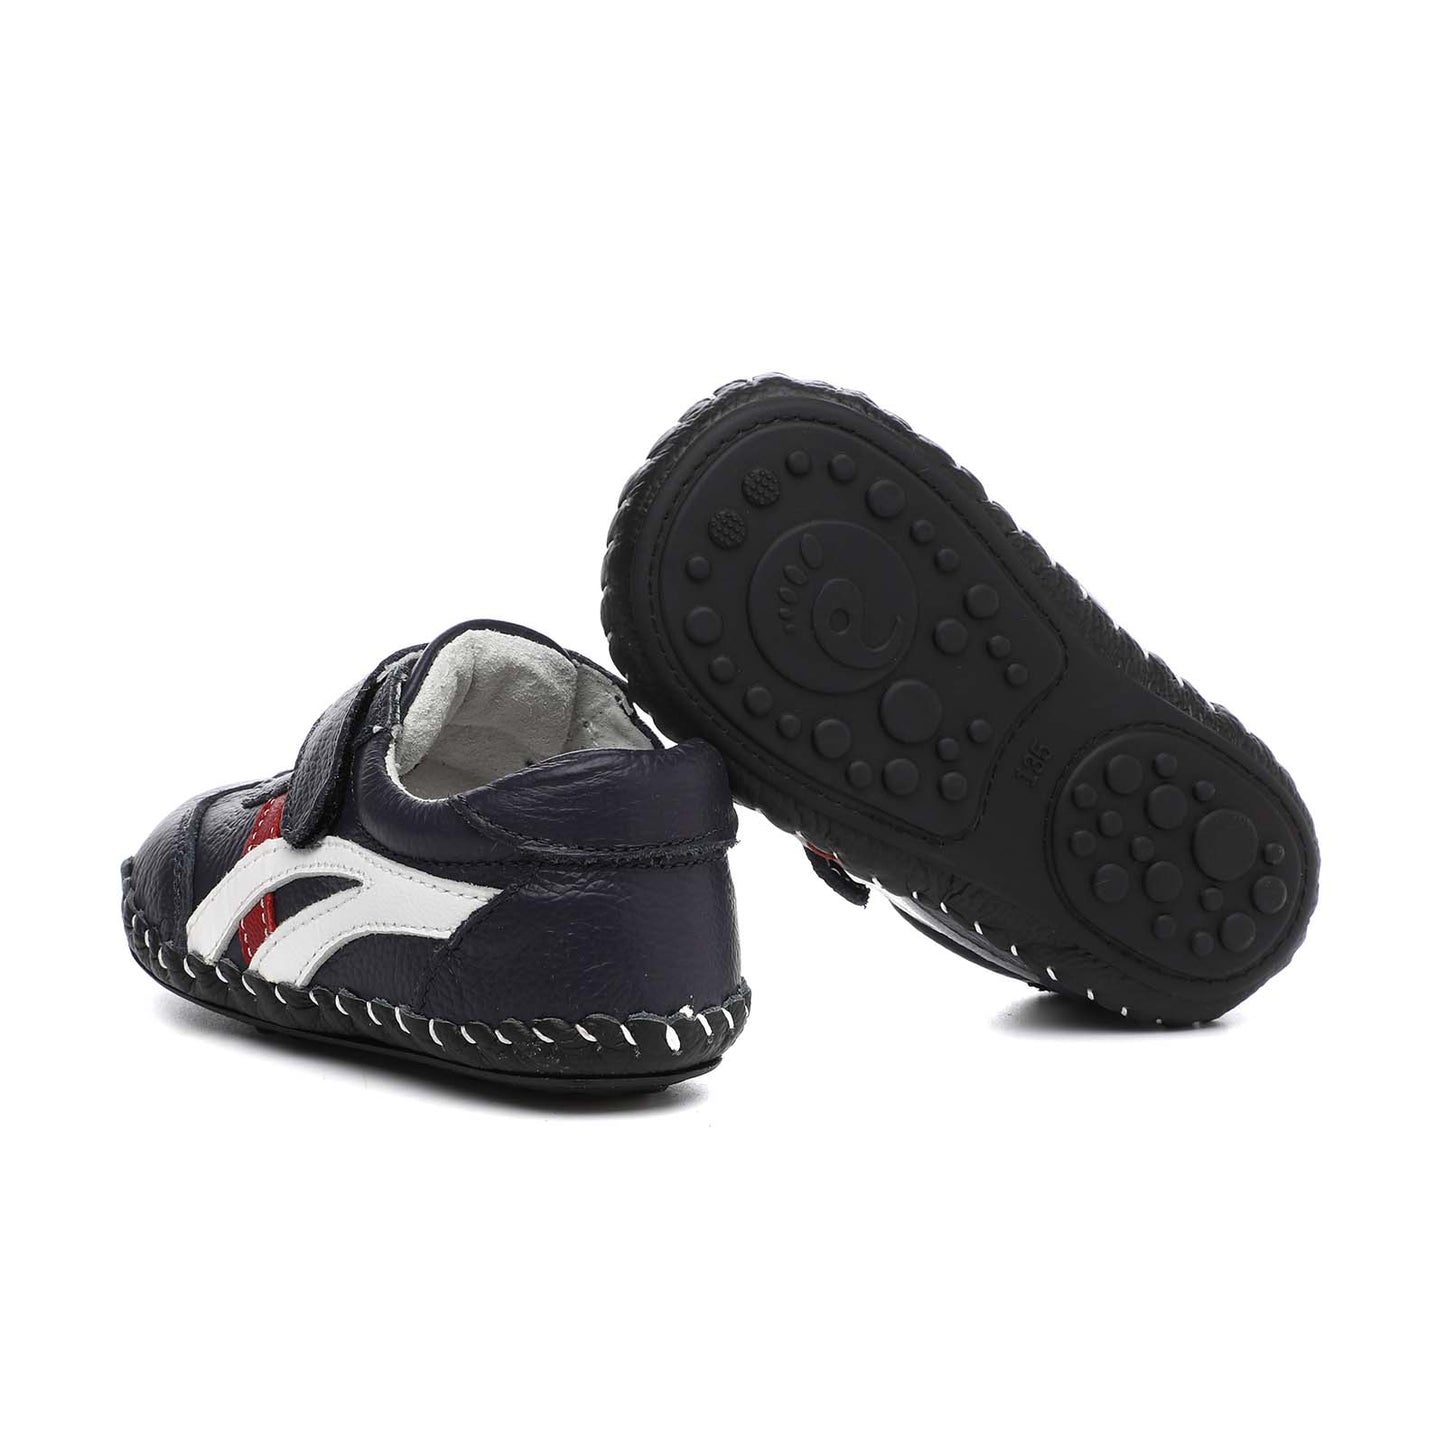 Freycoo - Navy Melvyn Infant Shoes